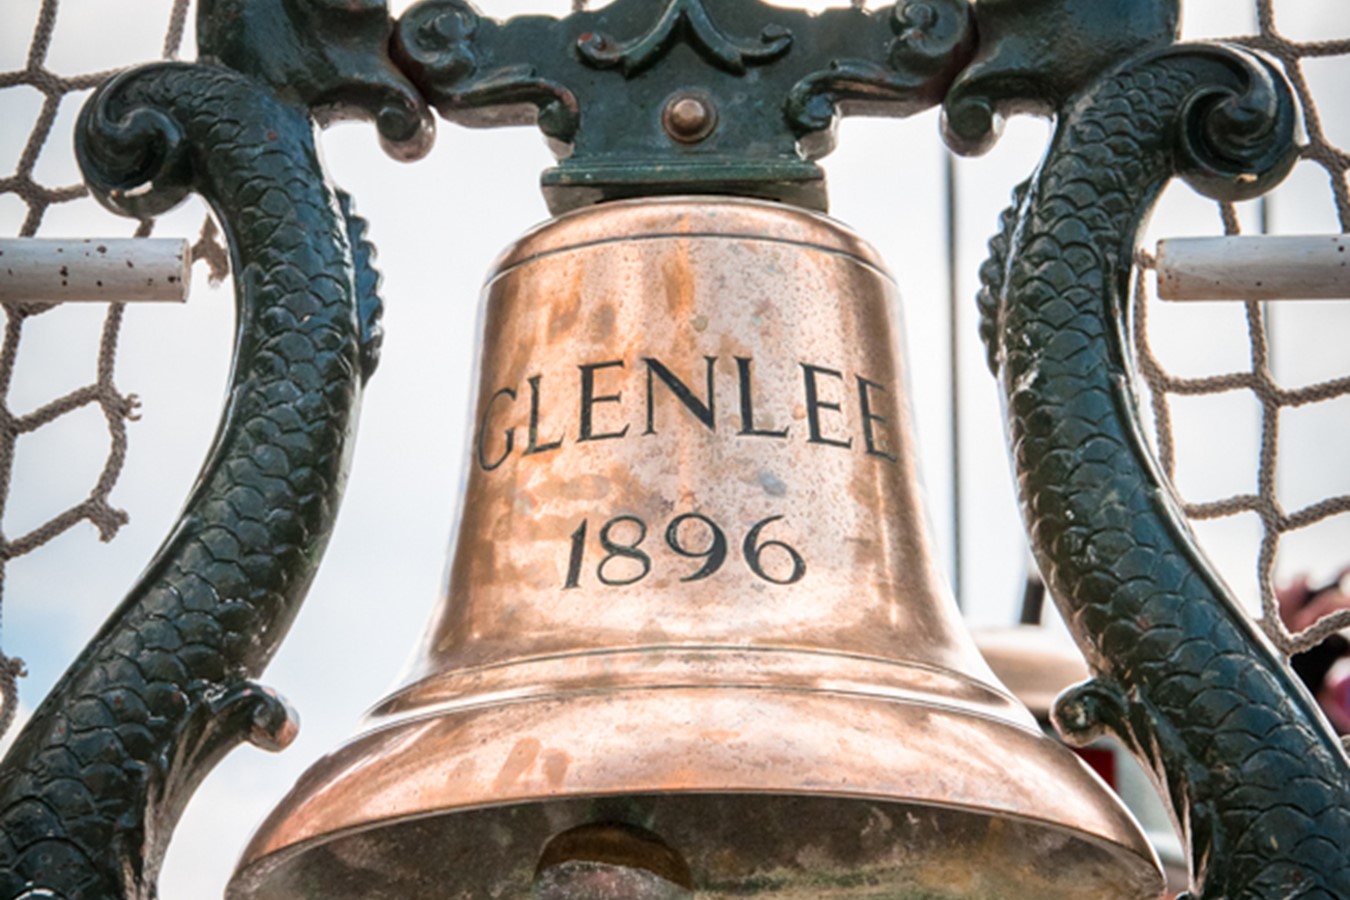 Glenlee bell